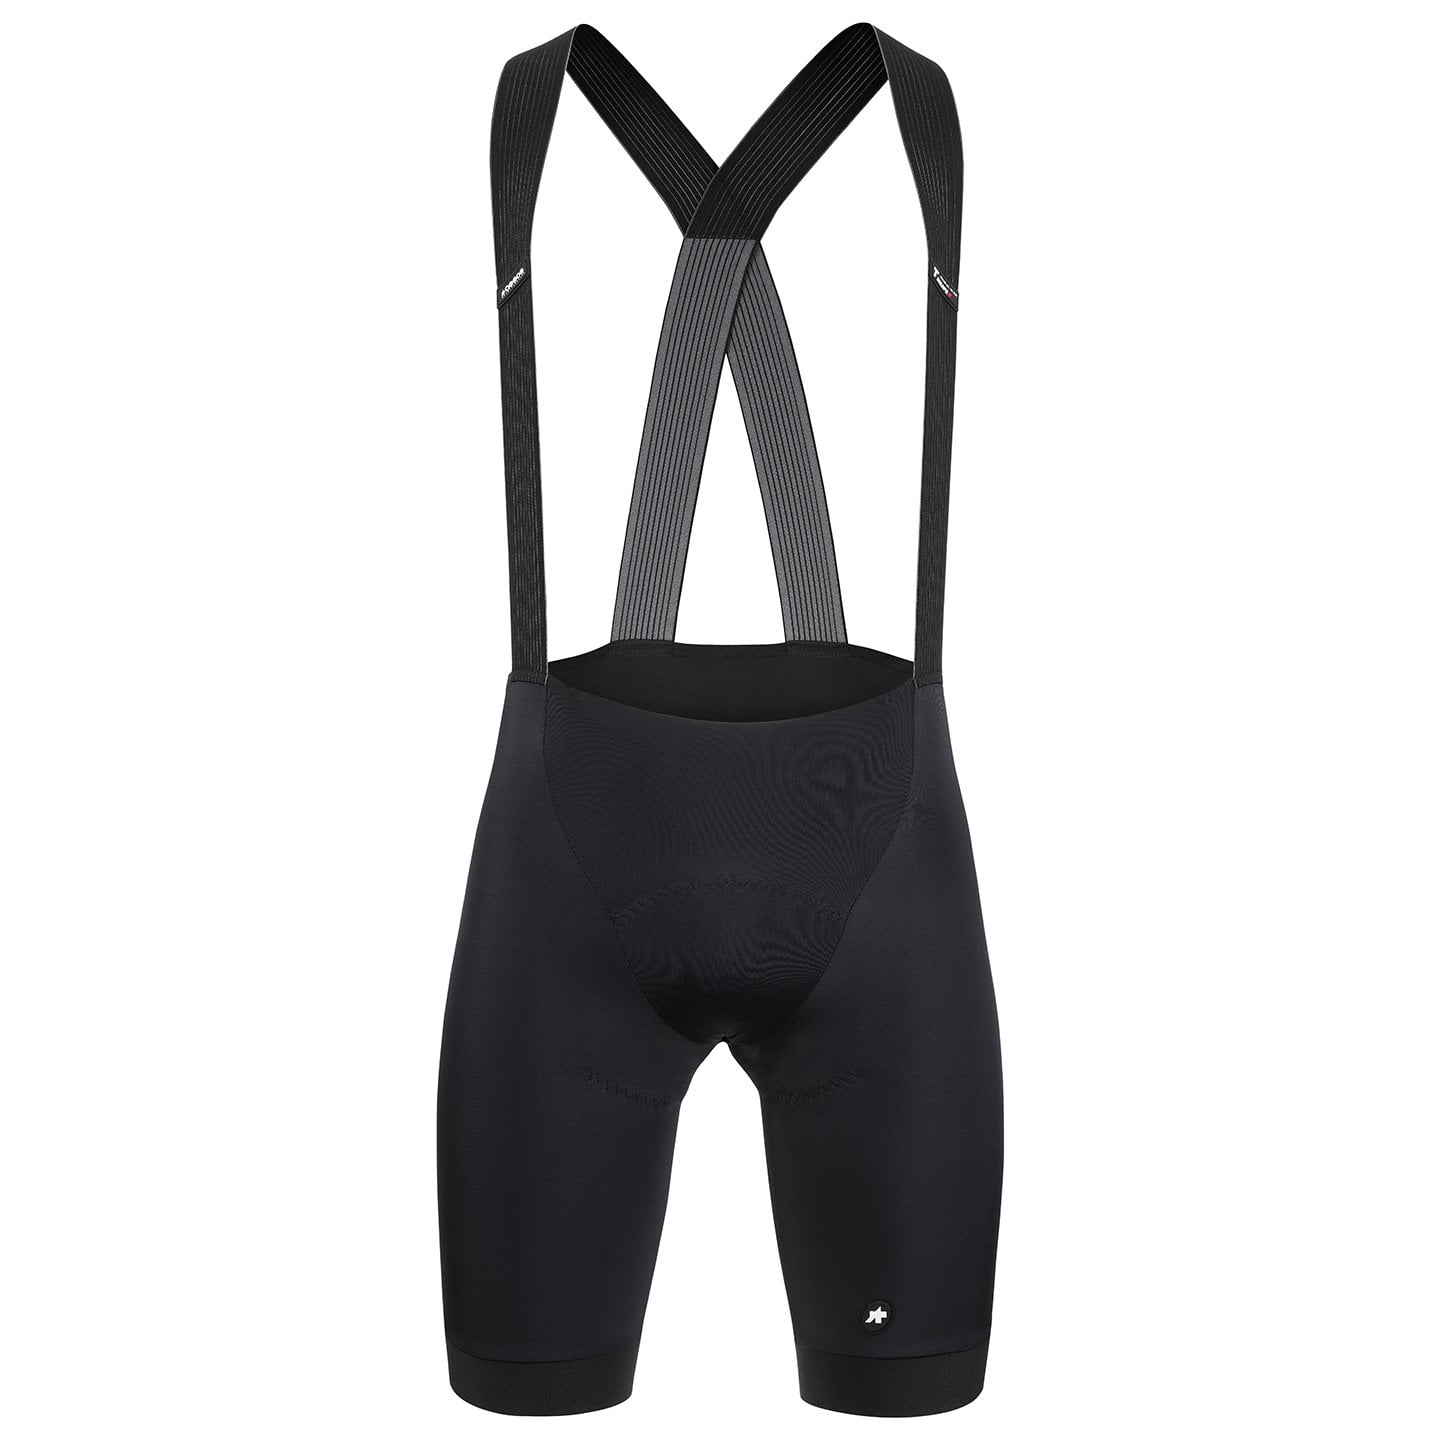 ASSOS Equipe R S9 Bib Shorts Bib Shorts, for men, size S, Cycle trousers, Cycle clothing